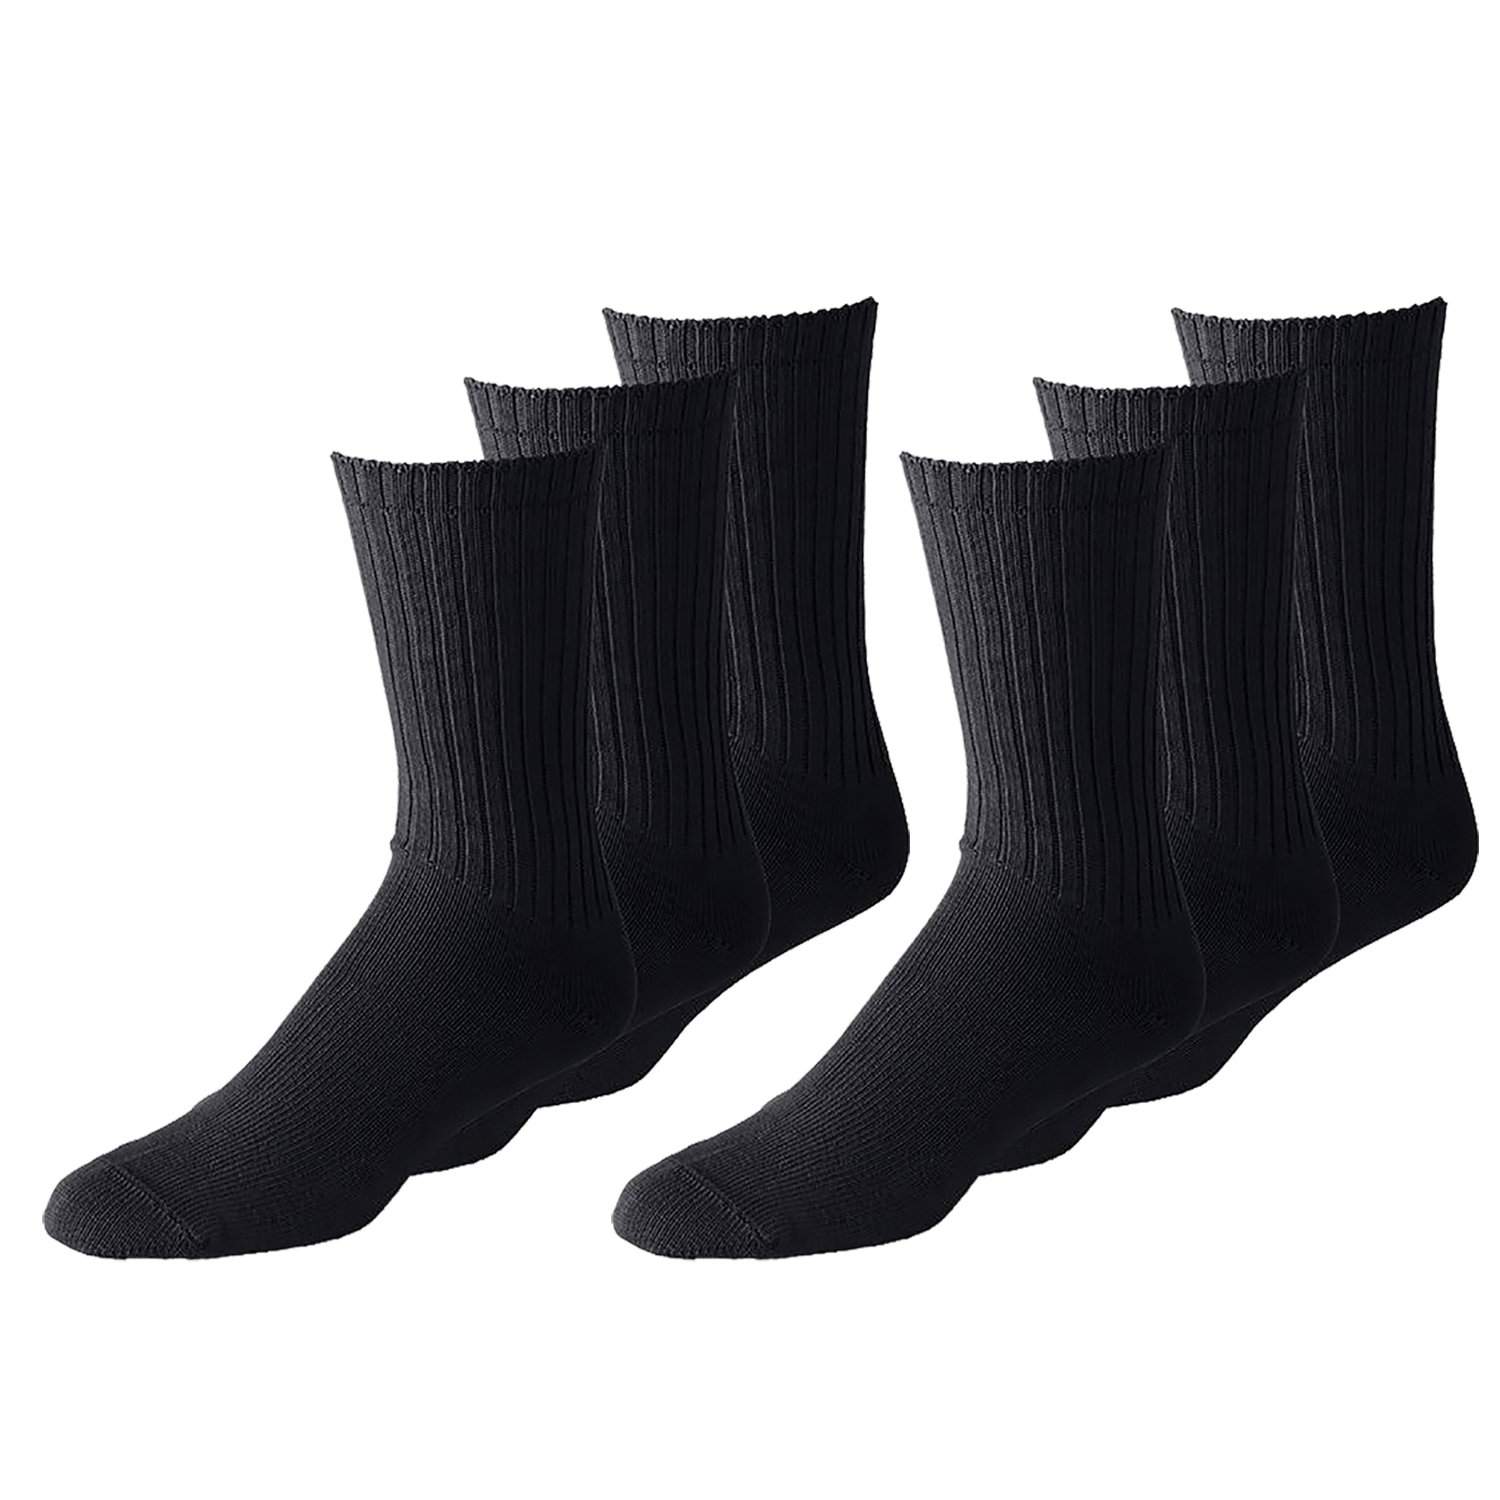 168 Pairs Qraftsy Men's Athletic Crew Socks - Bulk Lot Packs - Any Shoe Size